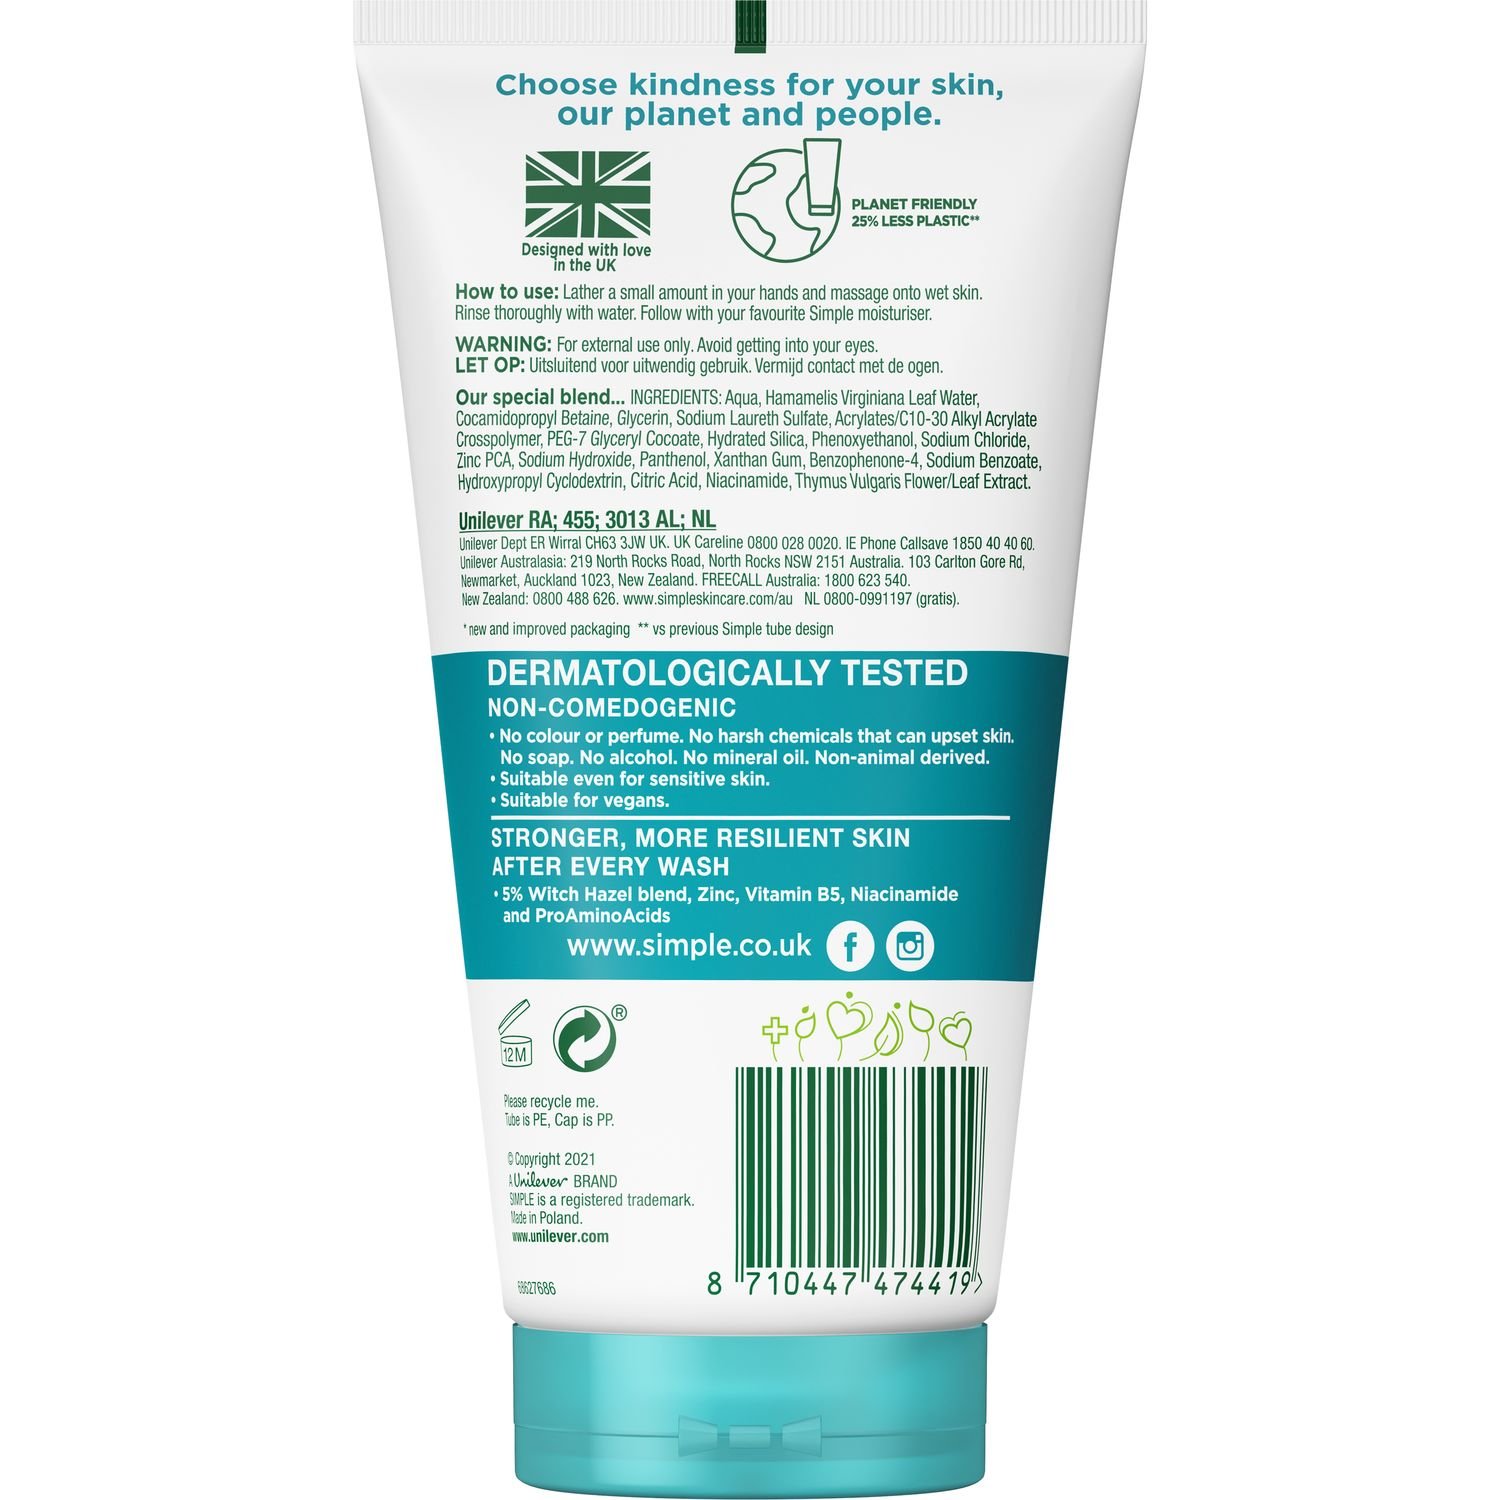 Очищающий гель для умывания Simple Daily Skin Detox Purifying Facial Wash, 150 мл - фото 2